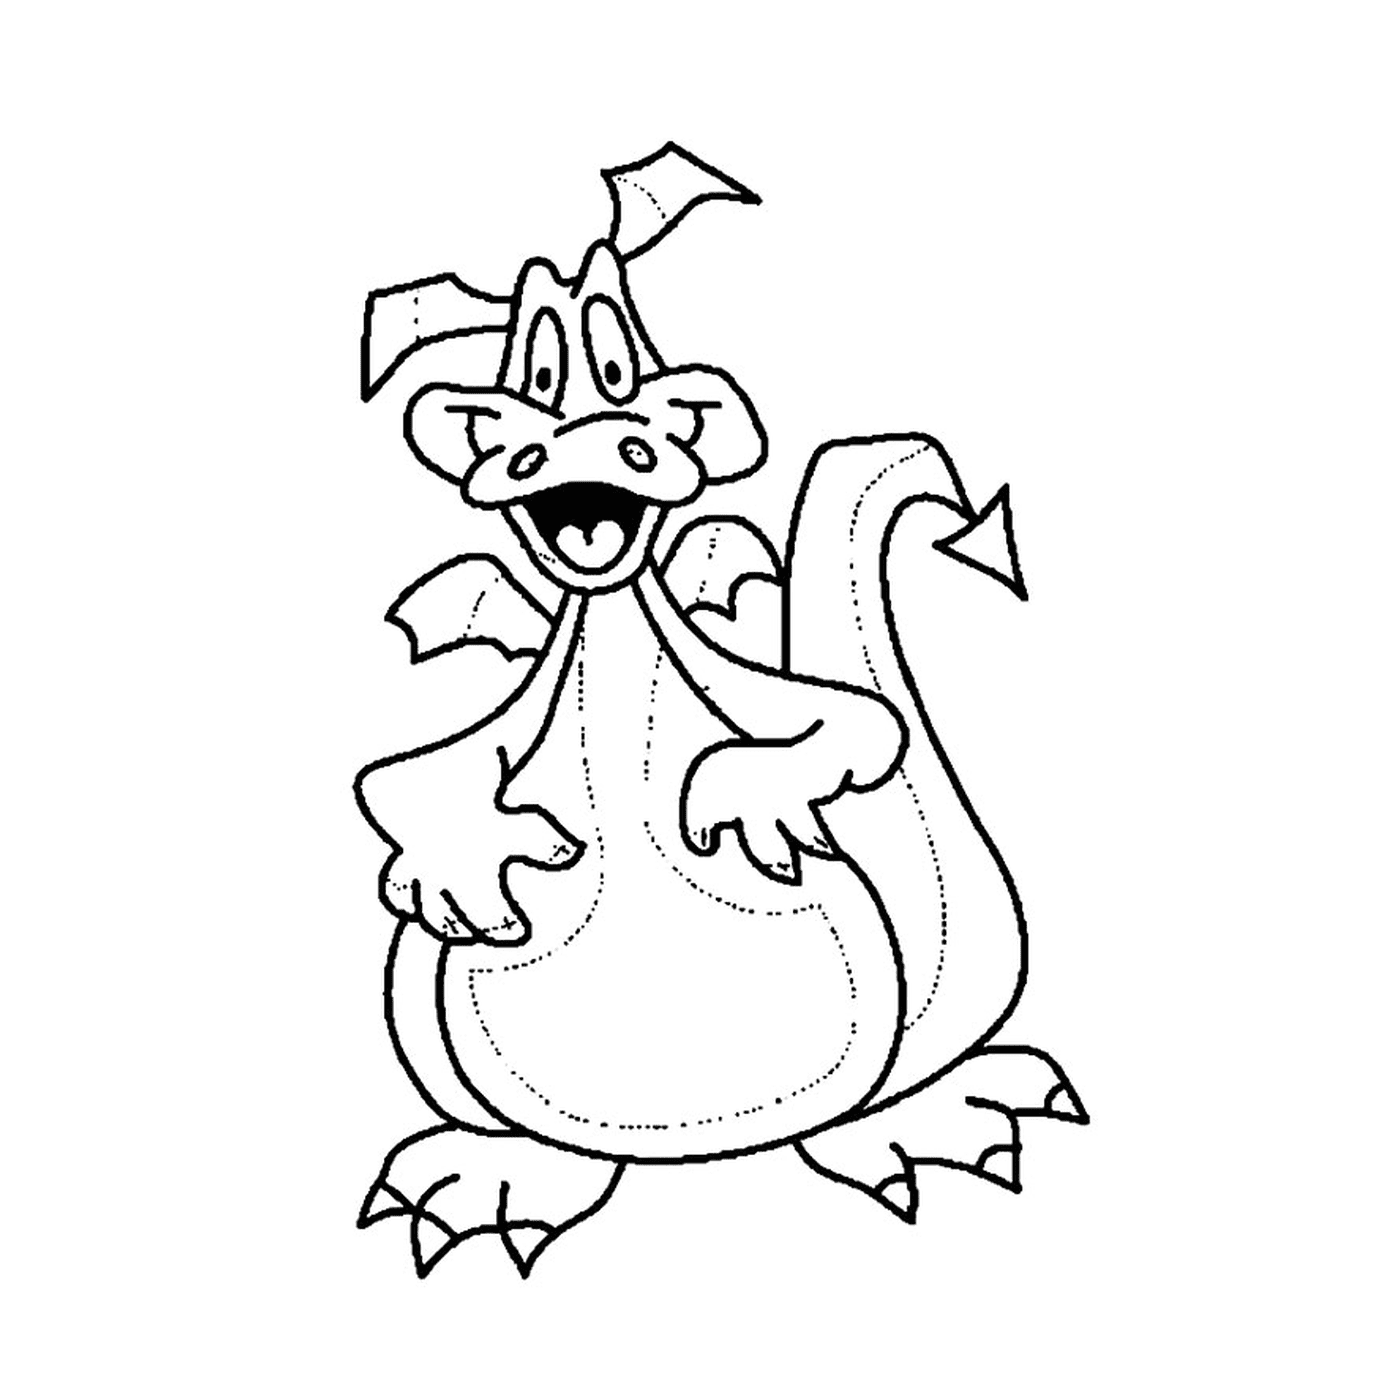  A funny dragon 